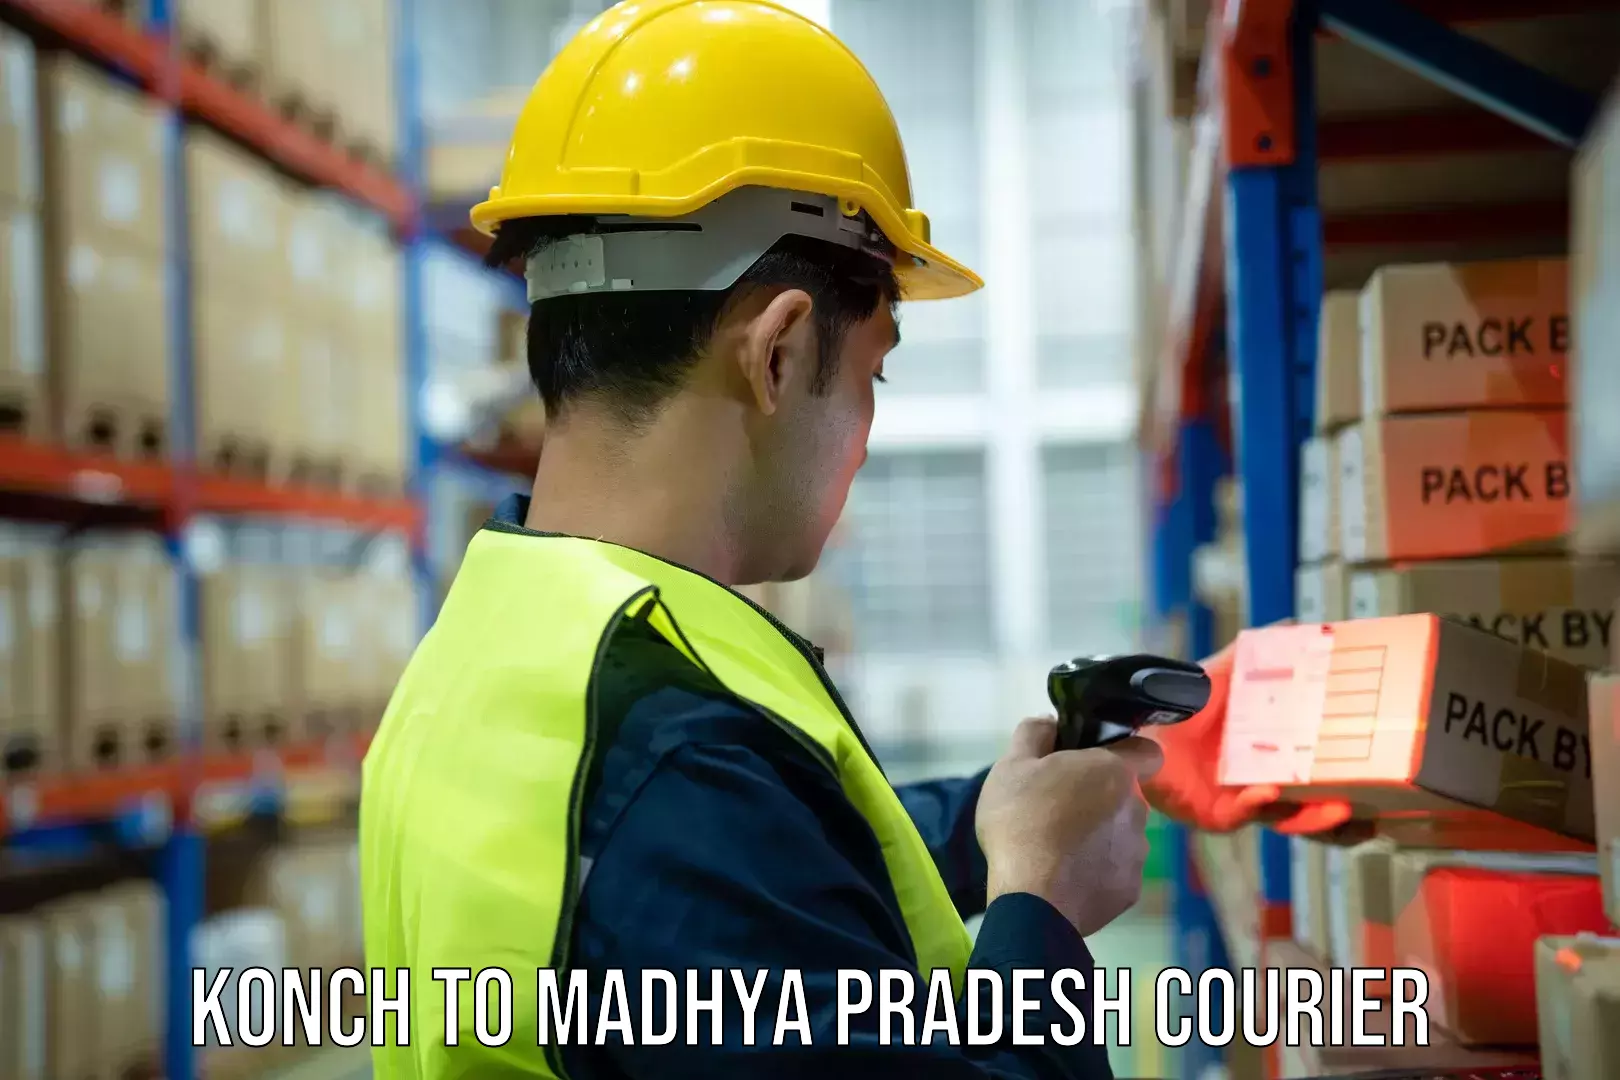 Bulk courier orders Konch to Madhya Pradesh